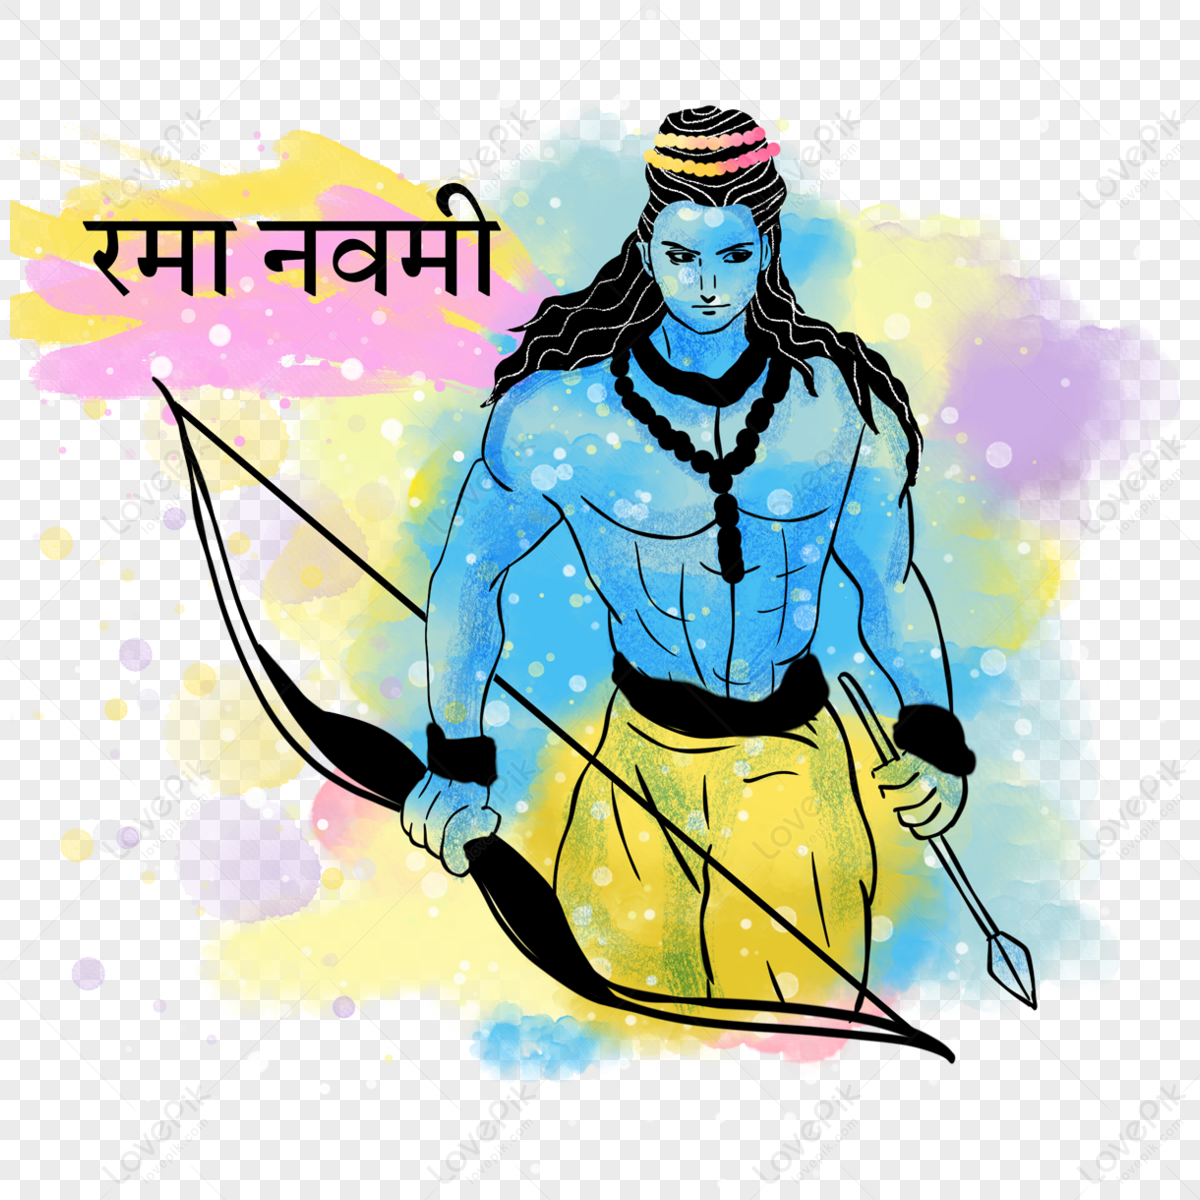 Jai Shri Ram PNG Transparent, Jai Shri Ram Hindi Text Png, Jai Shri Ram Png,  Jai Shri Ram, Happy Ramnavami PNG Image For Free Download | Png text, Holi  festival of colours,